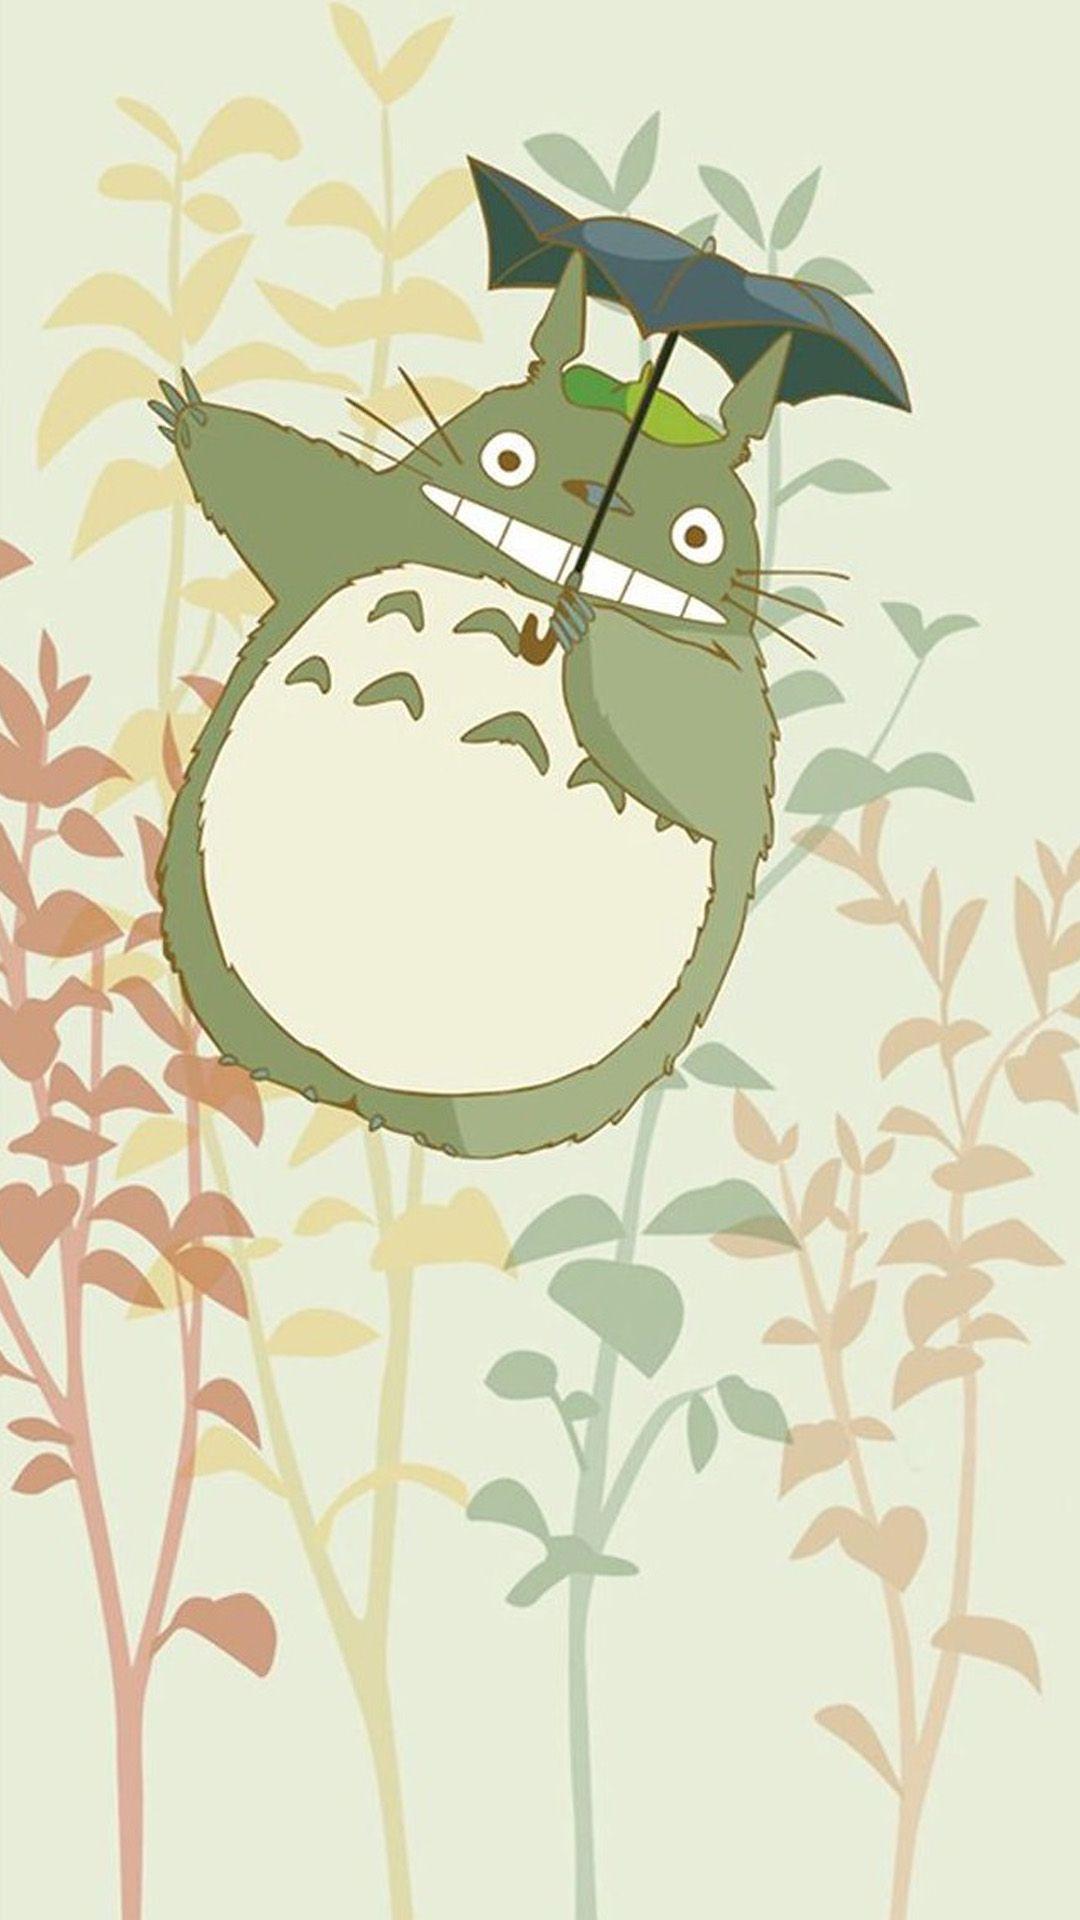 Cute My Neighbor Totoro IPhone 6 Wallpaper Download. IPhone Wallpaper, IPad Wallpaper One Stop Download. Totoro Art, Totoro, Ghibli Art